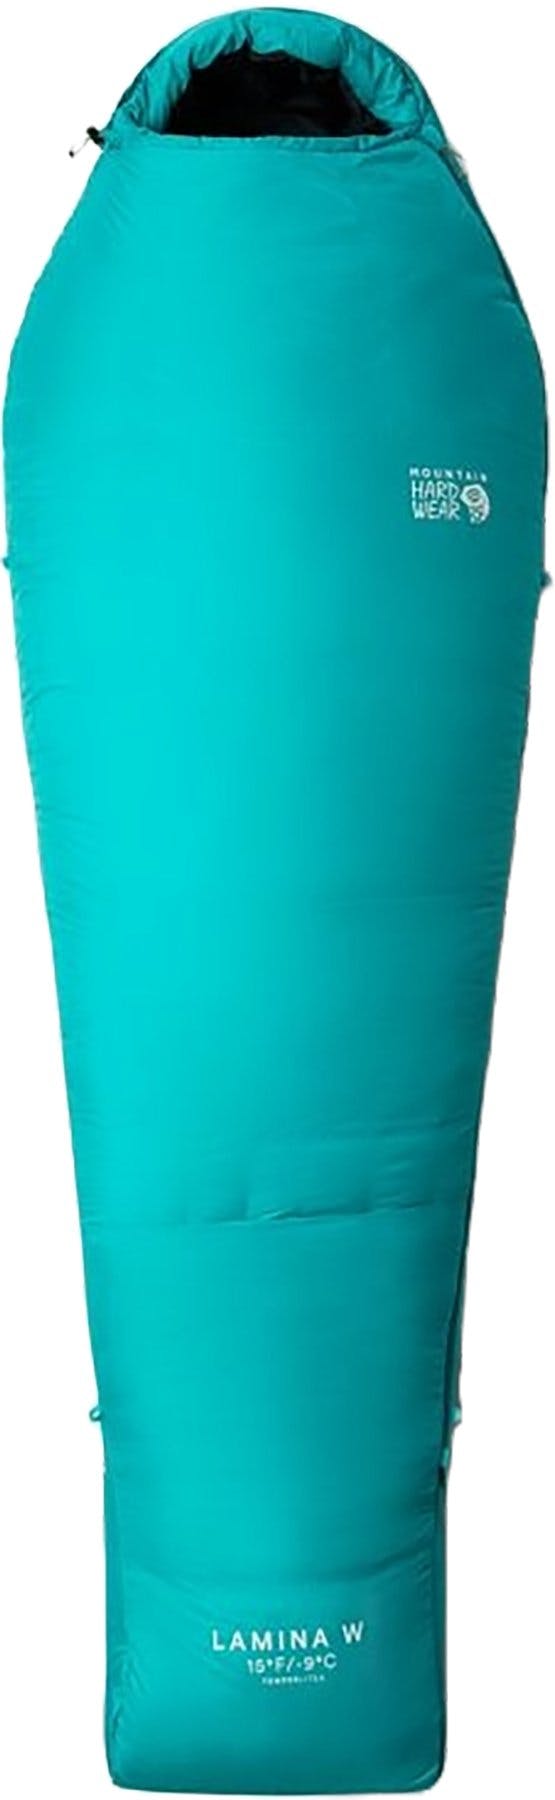 Product image for Lamina Sleeping Bag 15°F/-9°C - Long - Women's